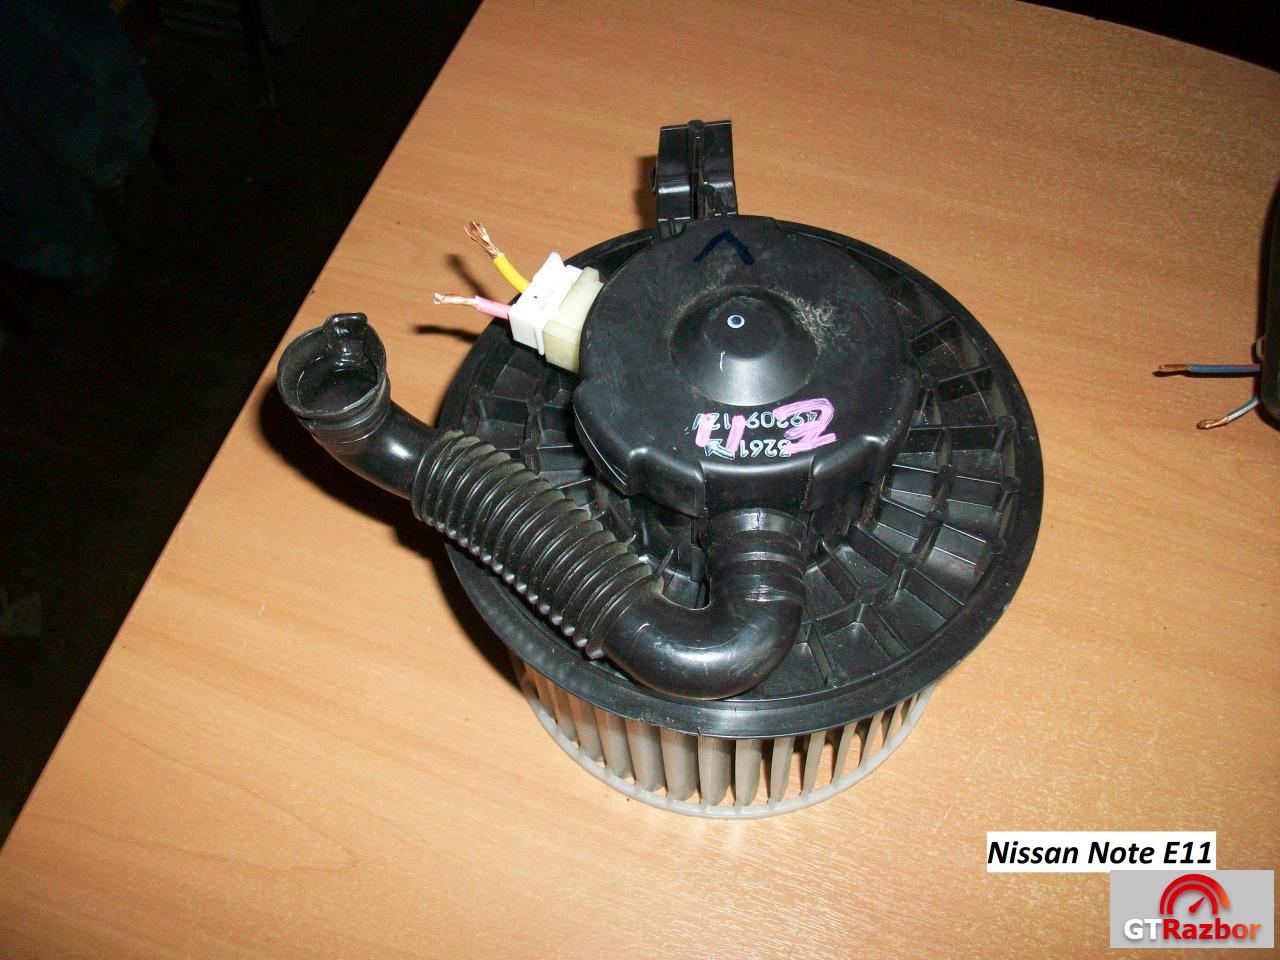 Мотор отопителя Ниссан ноут е11. Вентилятор отопителя Ниссан ноте е11. Печка Ниссан ноут 1.4. Вентилятор gtxrb KJZ Nissan Nite.